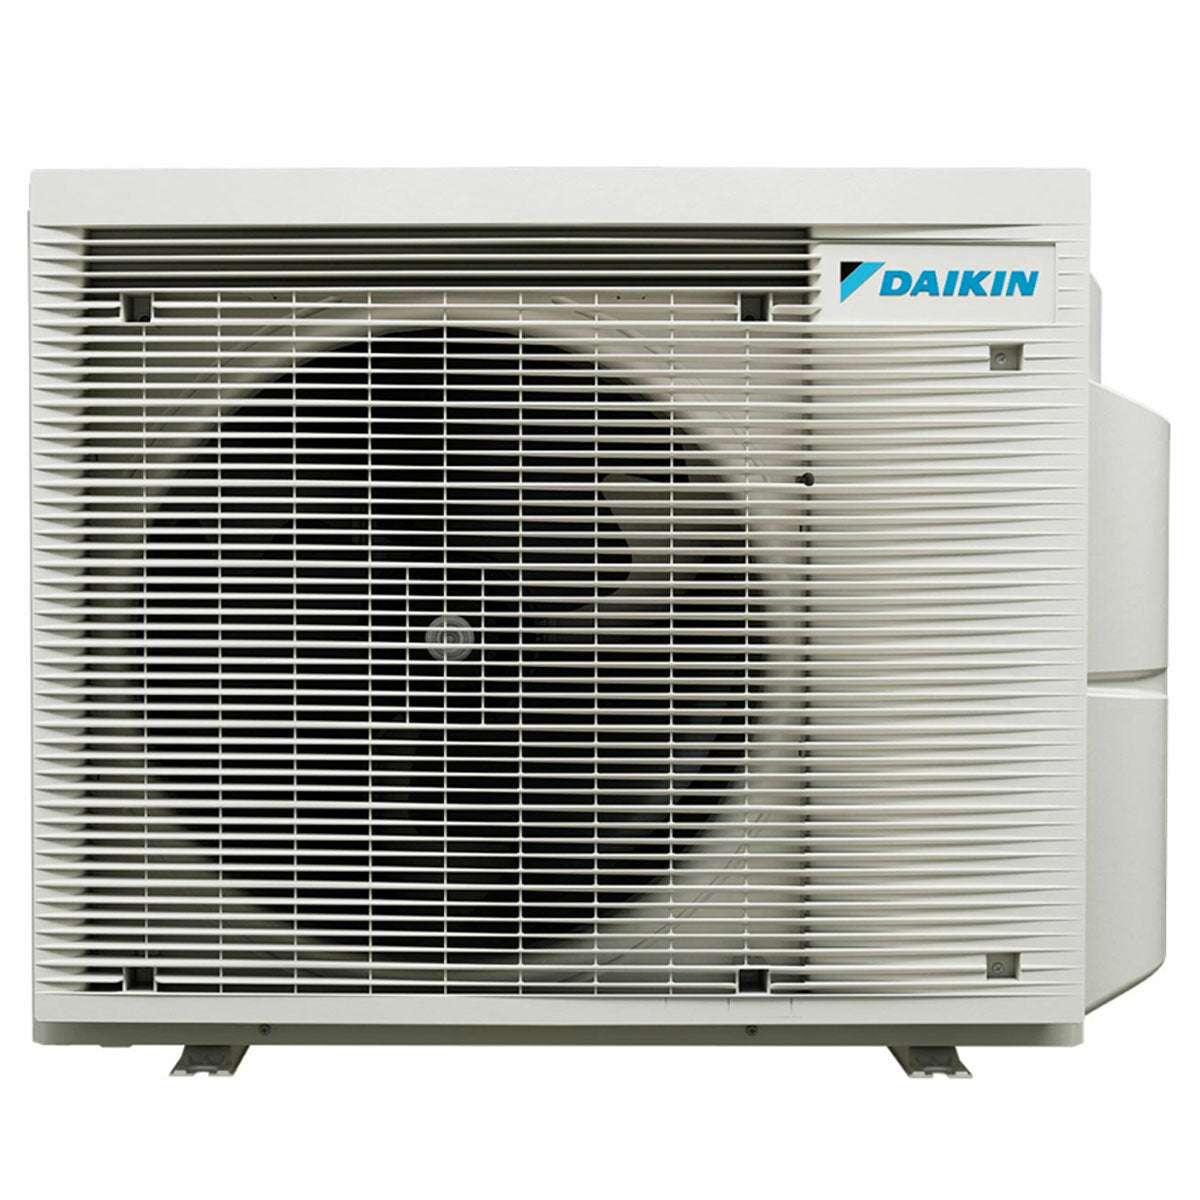 Daikin Mini Sky FDXM-F9 ducted air conditioner trial split 9000+12000+12000 BTU inverter A++ external 6.8 kW